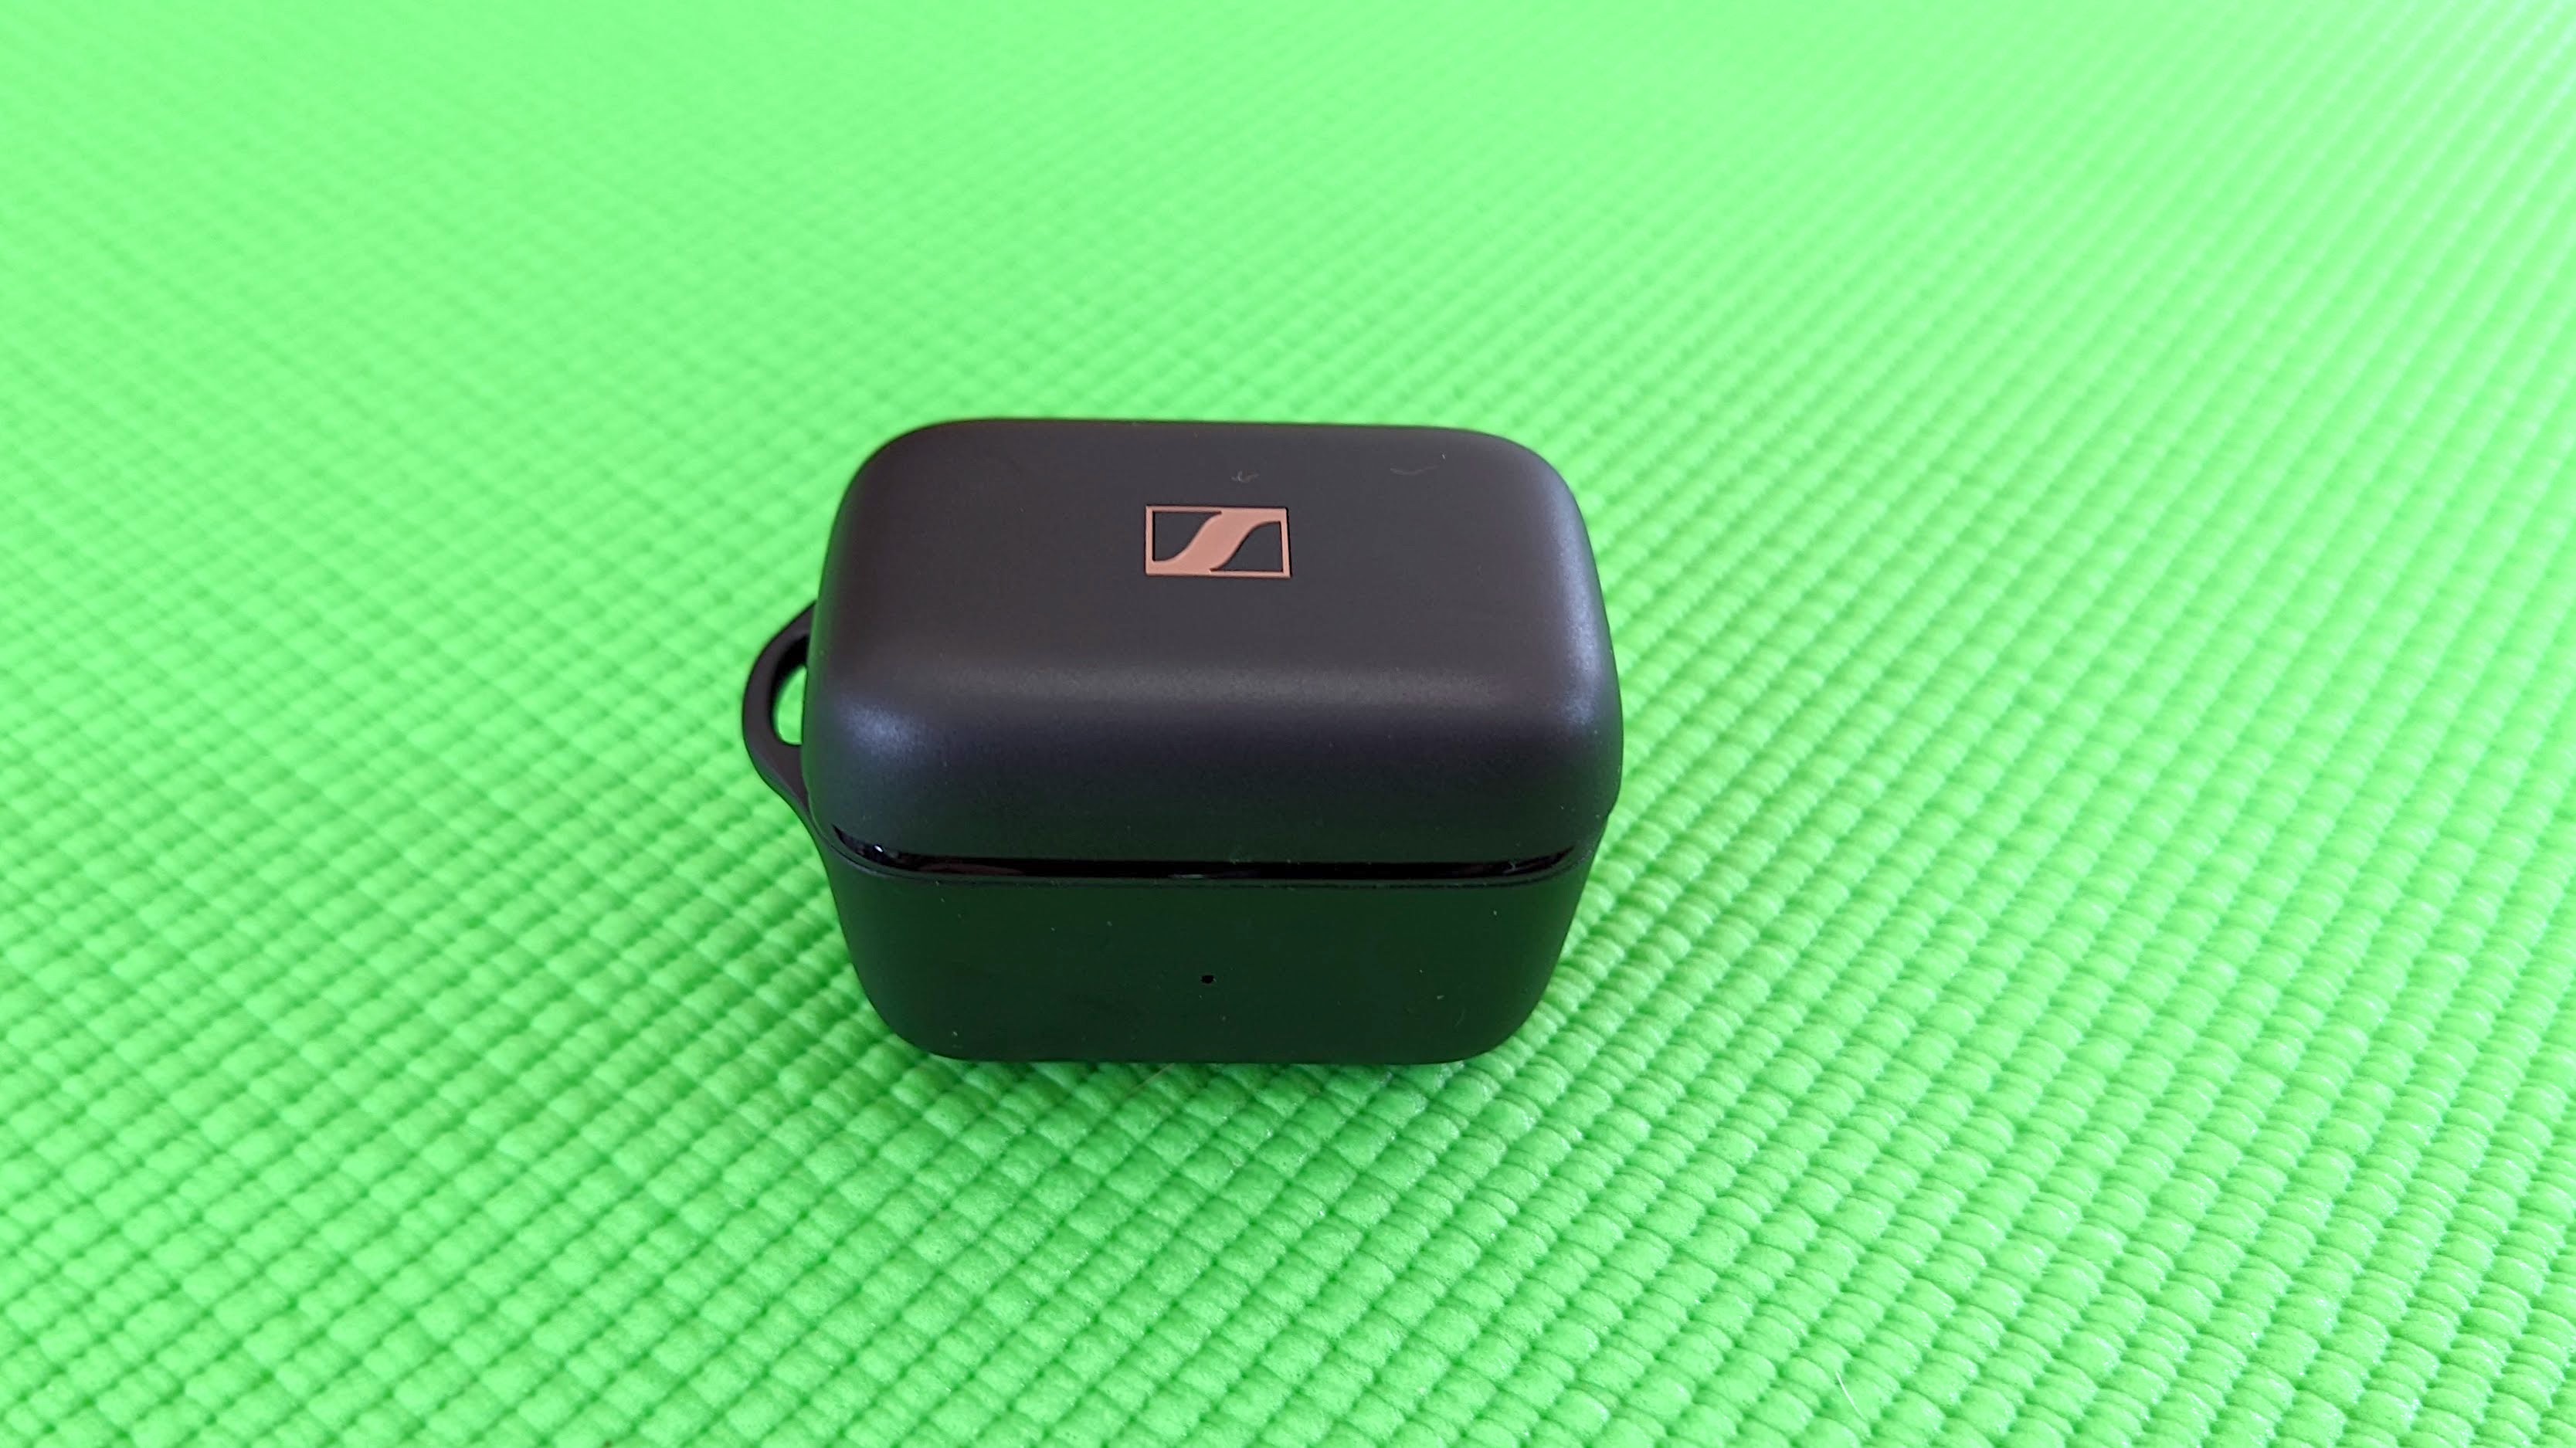 The Sennheiser Sport True Wireless charging case sitting on a green yoga mat